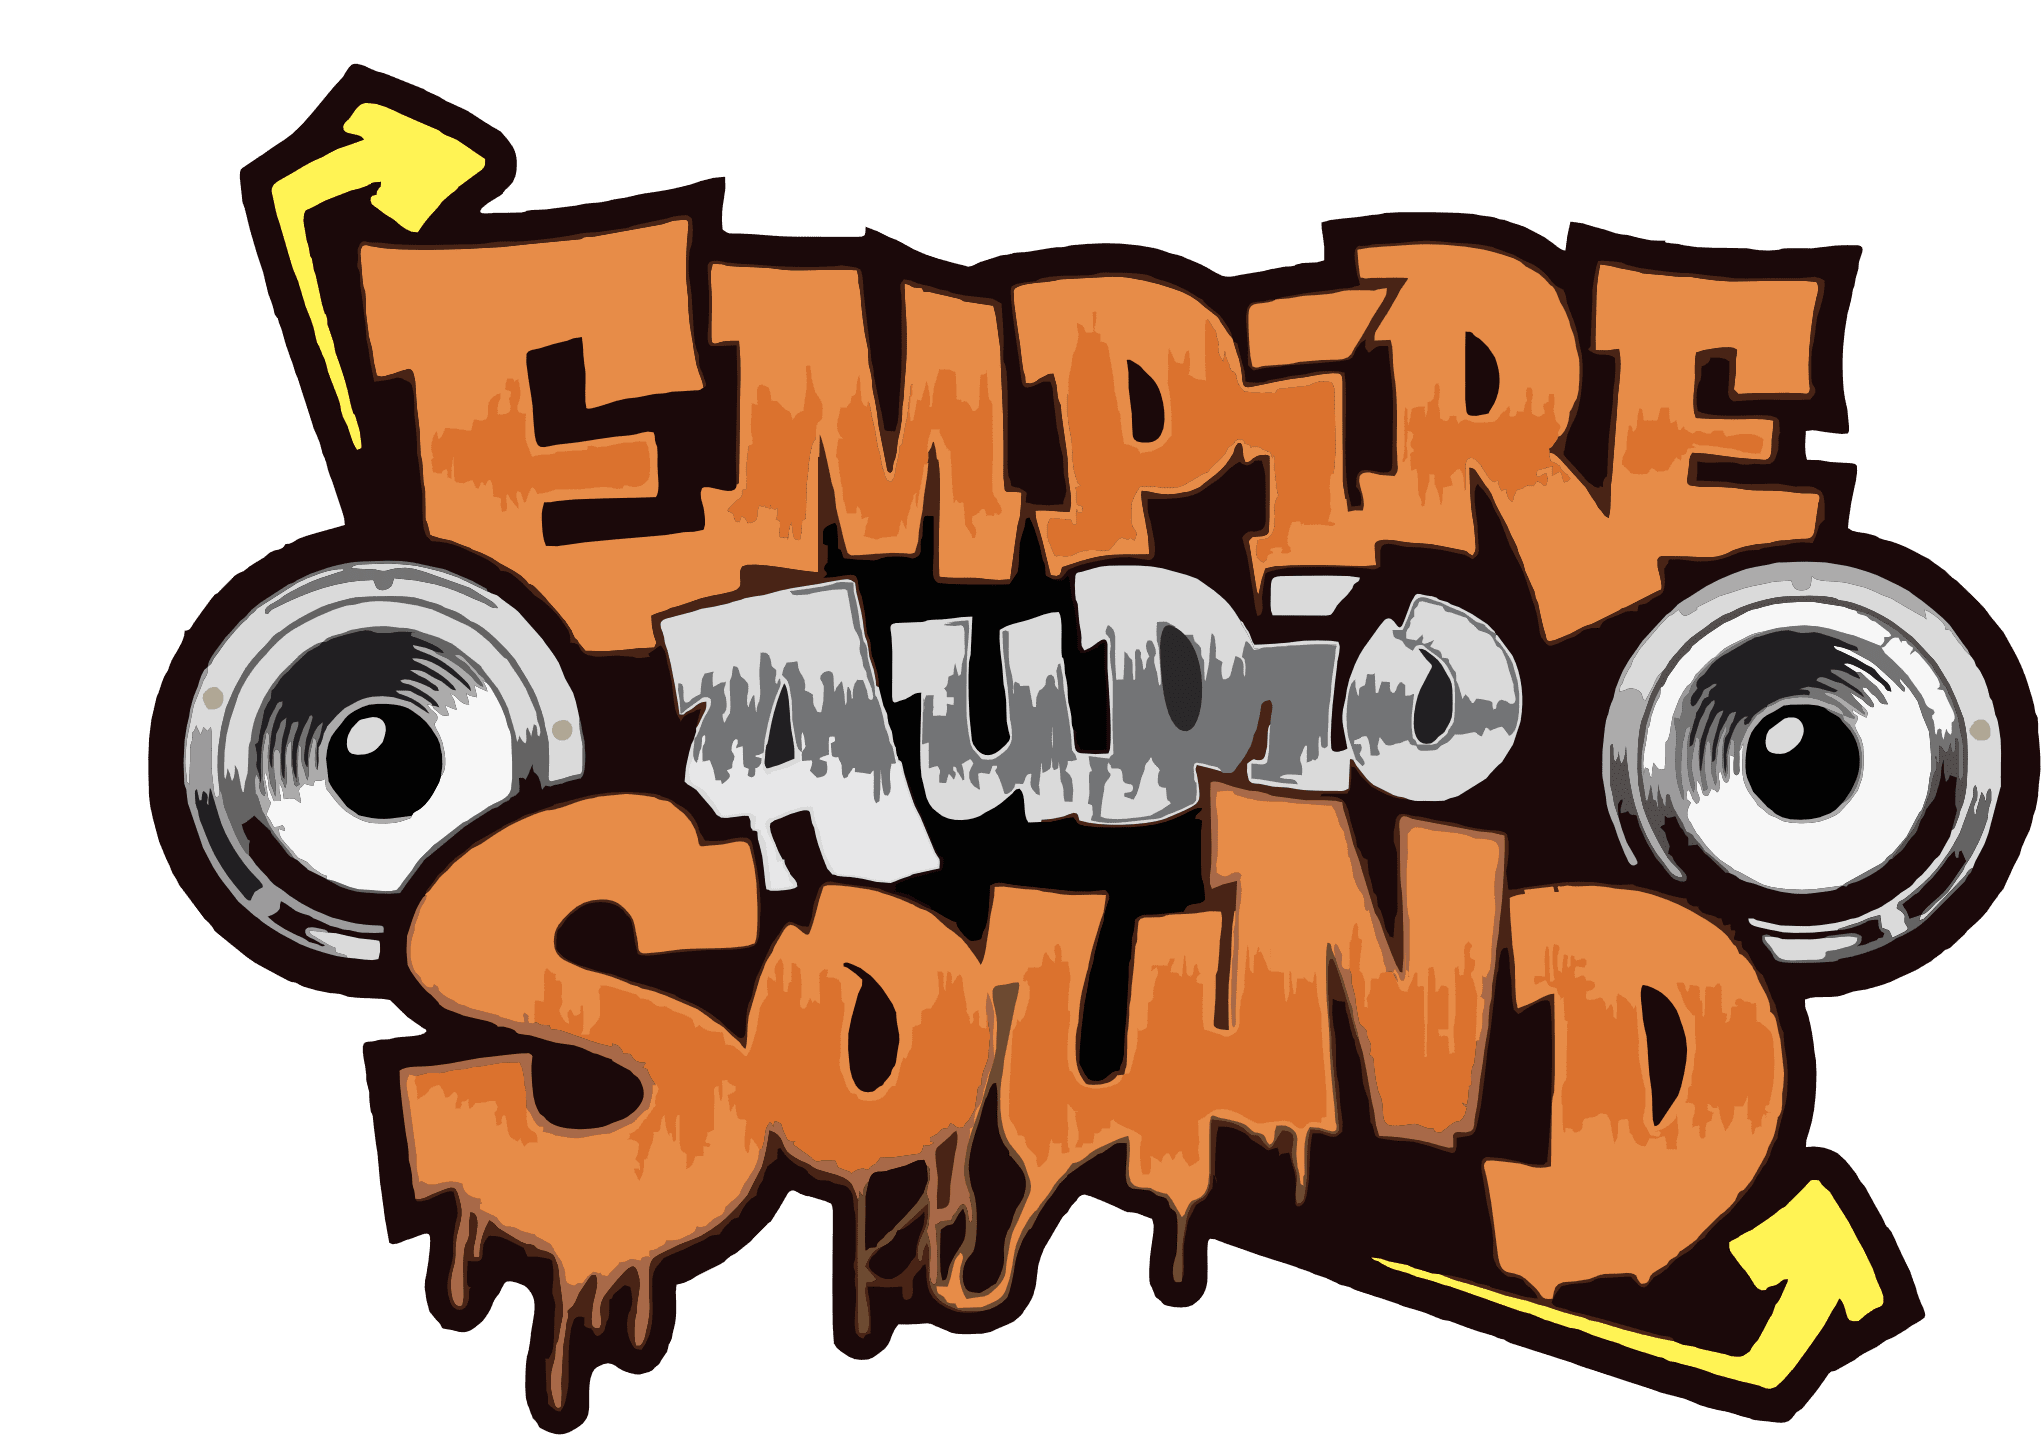 Empire Car Audio Shop